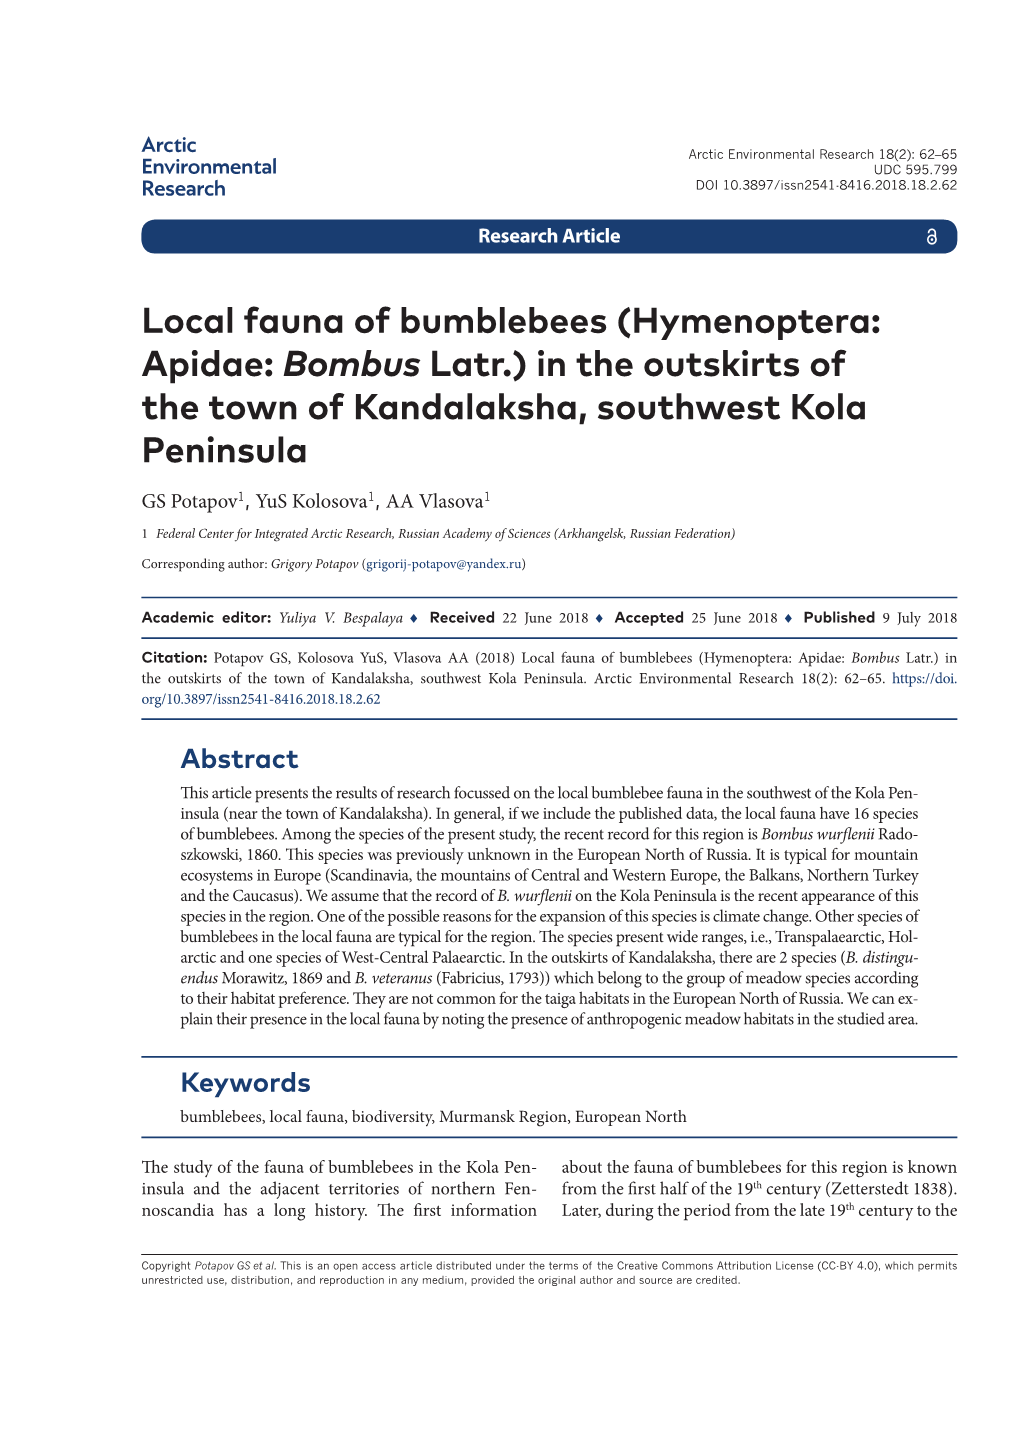 Hymenoptera: Apidae: Bombus Latr.) in the Outskirts of the Town of Kandalaksha, Southwest Kola Peninsula